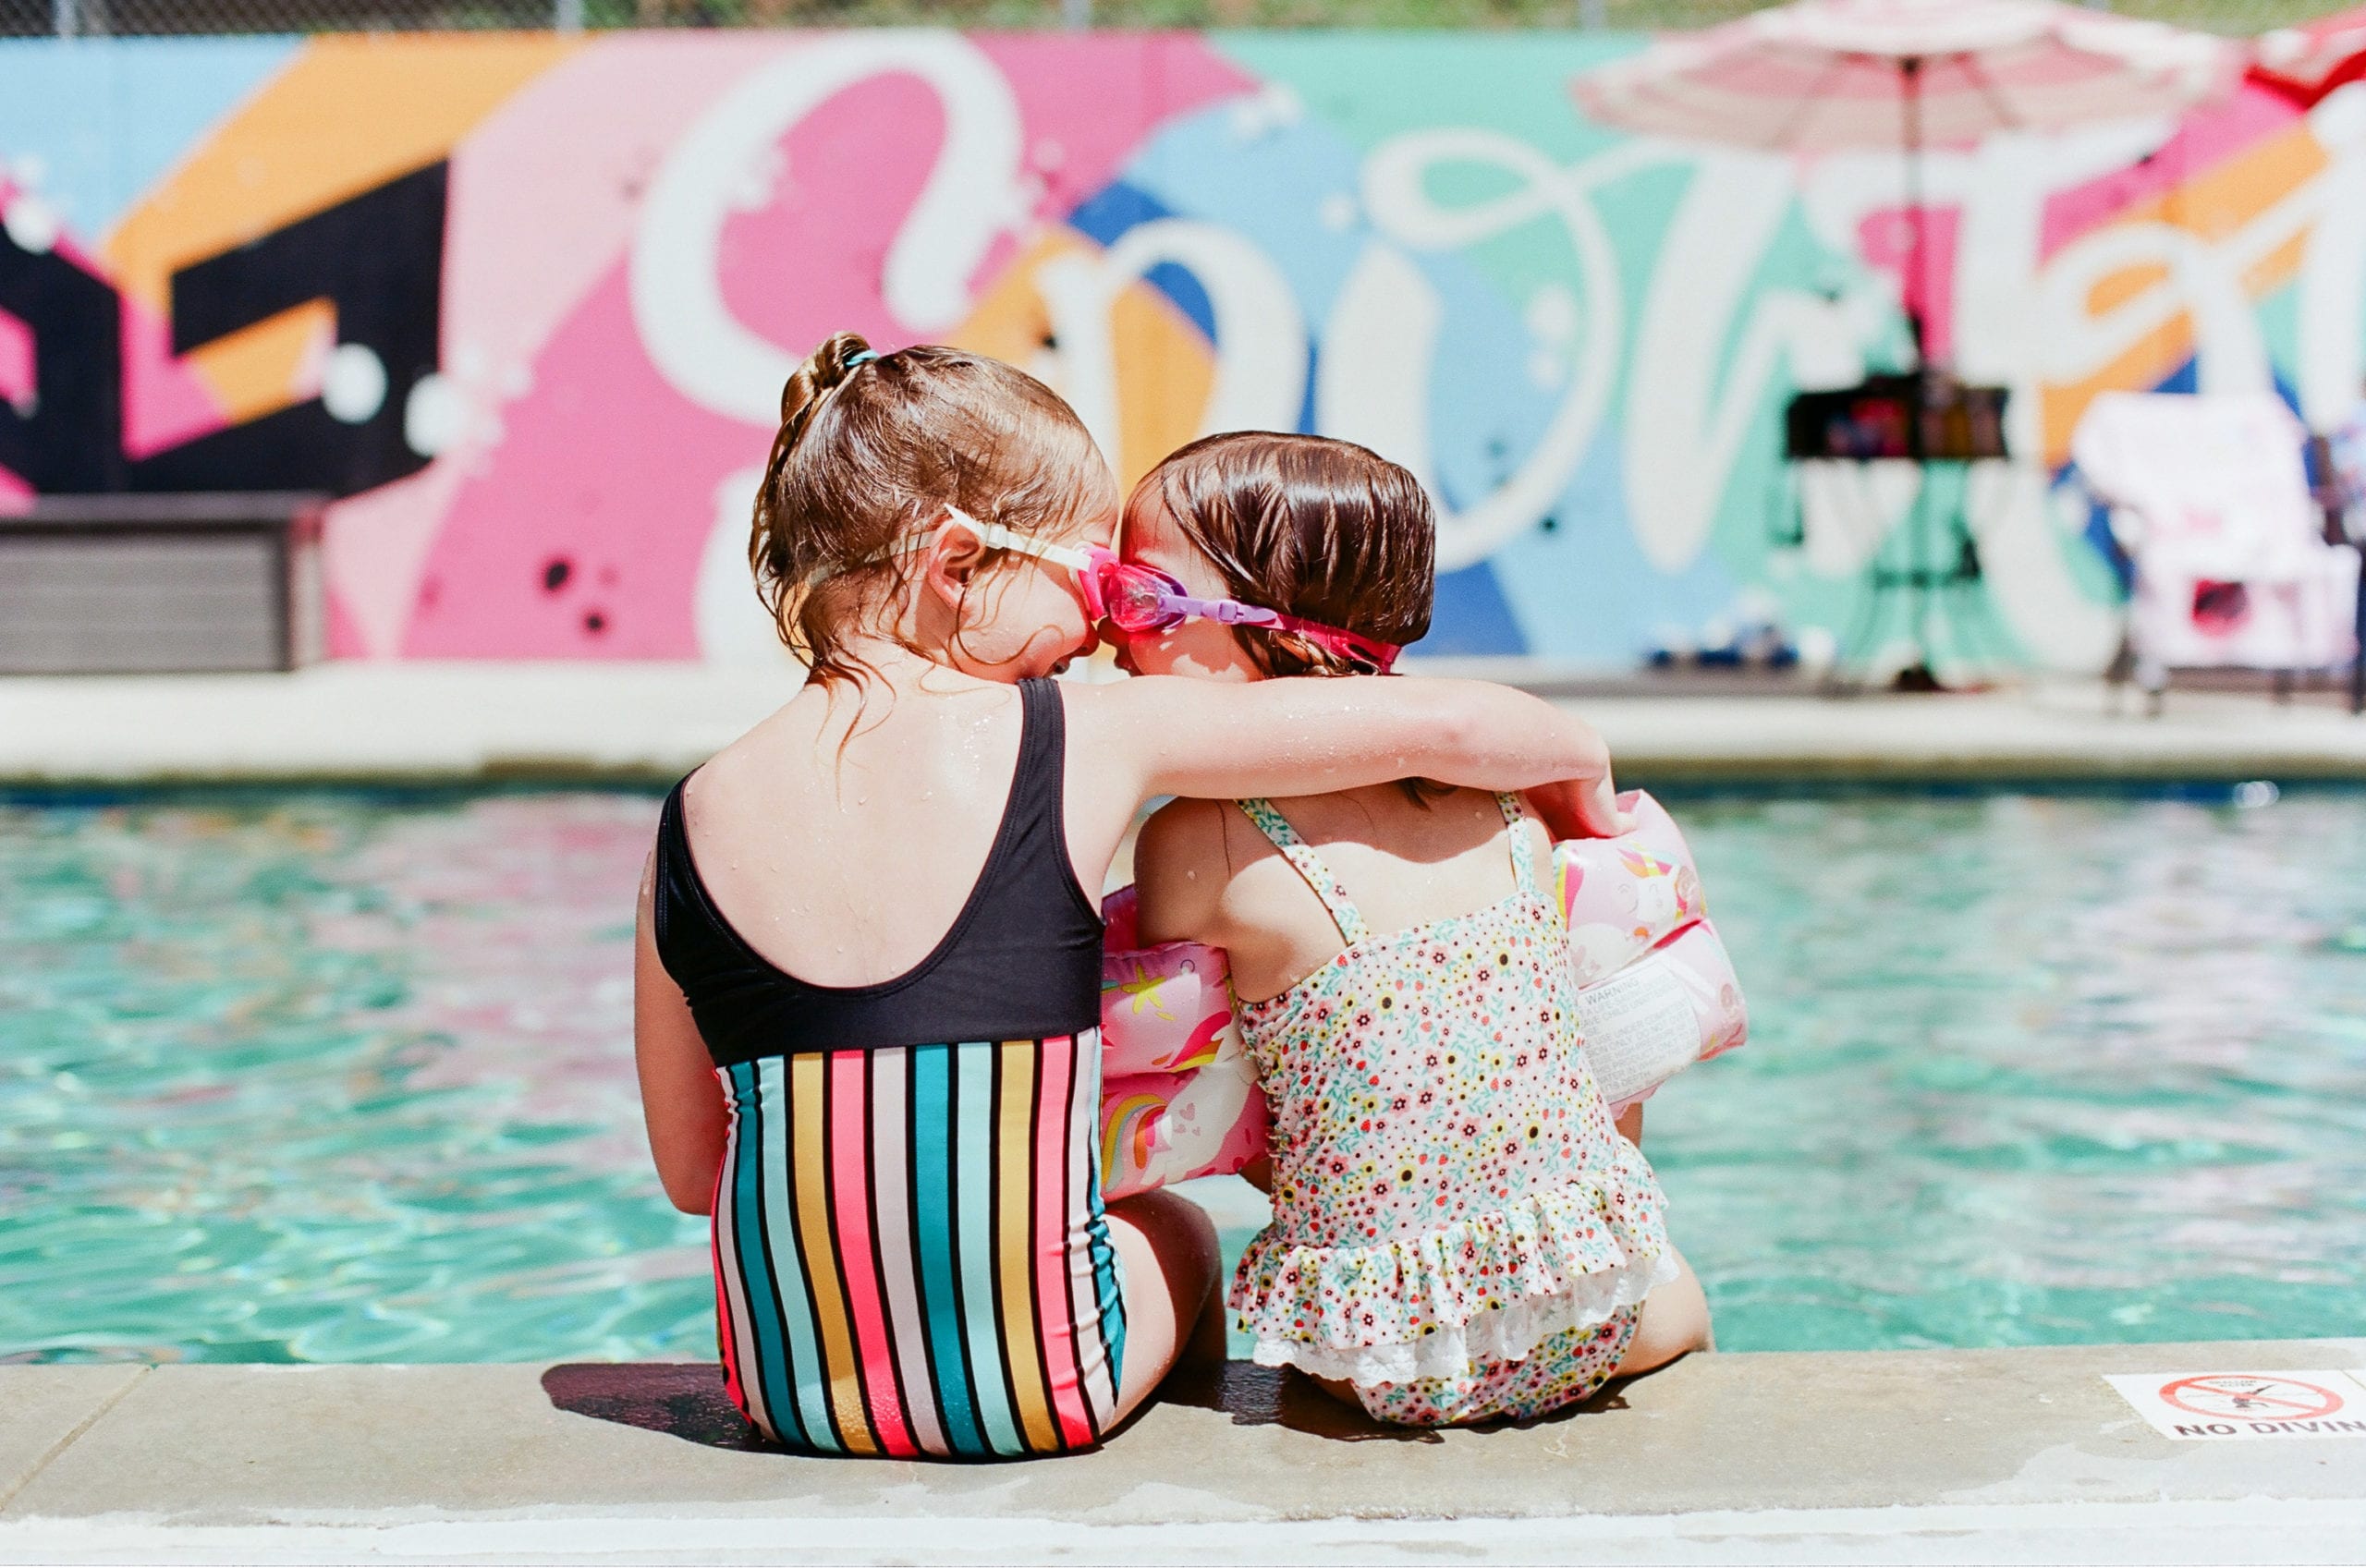 Kodak Ektar 100 little girls on edge of pool nose to nose photo